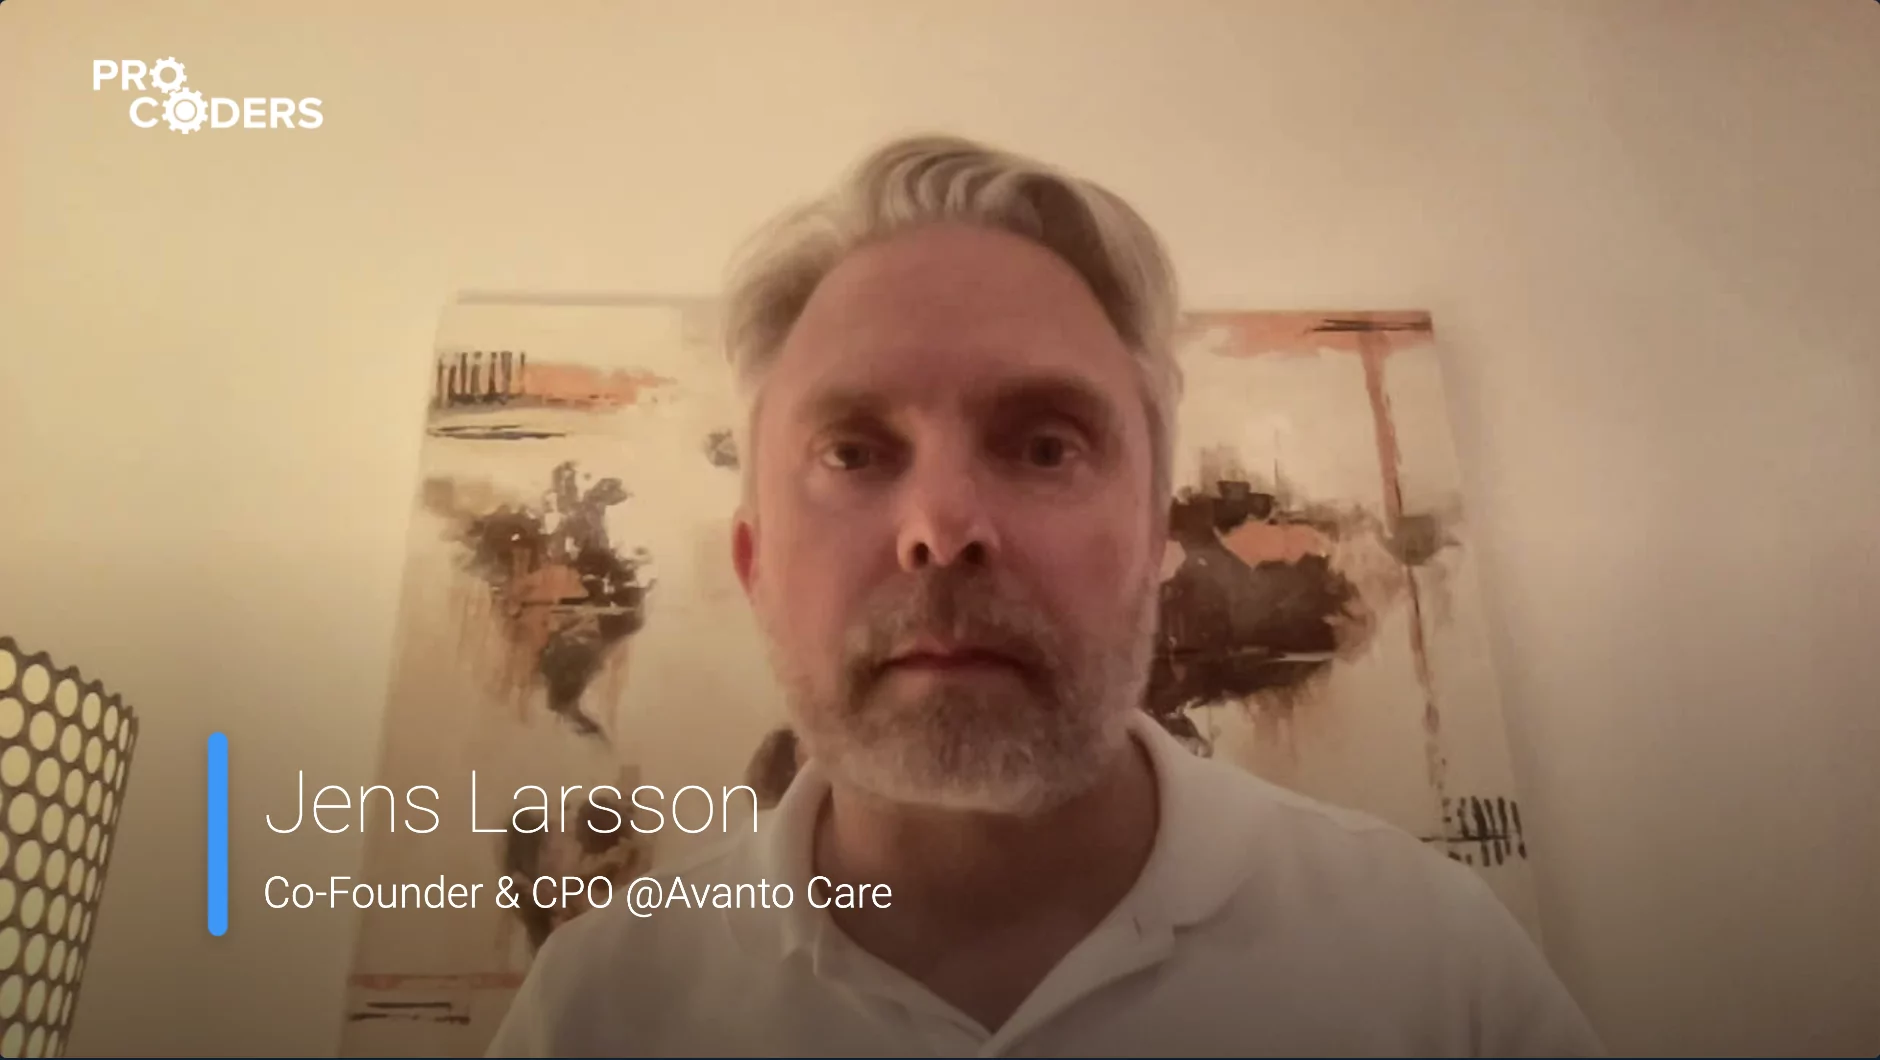 Jens Larsson co-founder & CPO @Avanto Care